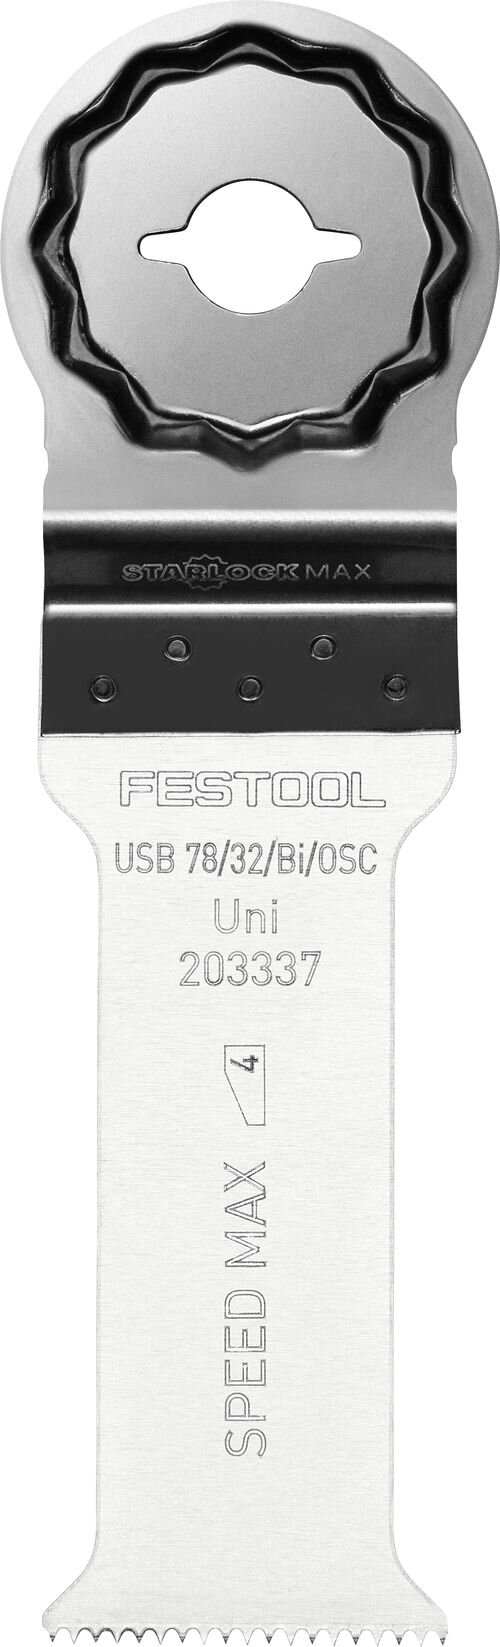 Sägeblatt USB 78/32/Bi/OSC